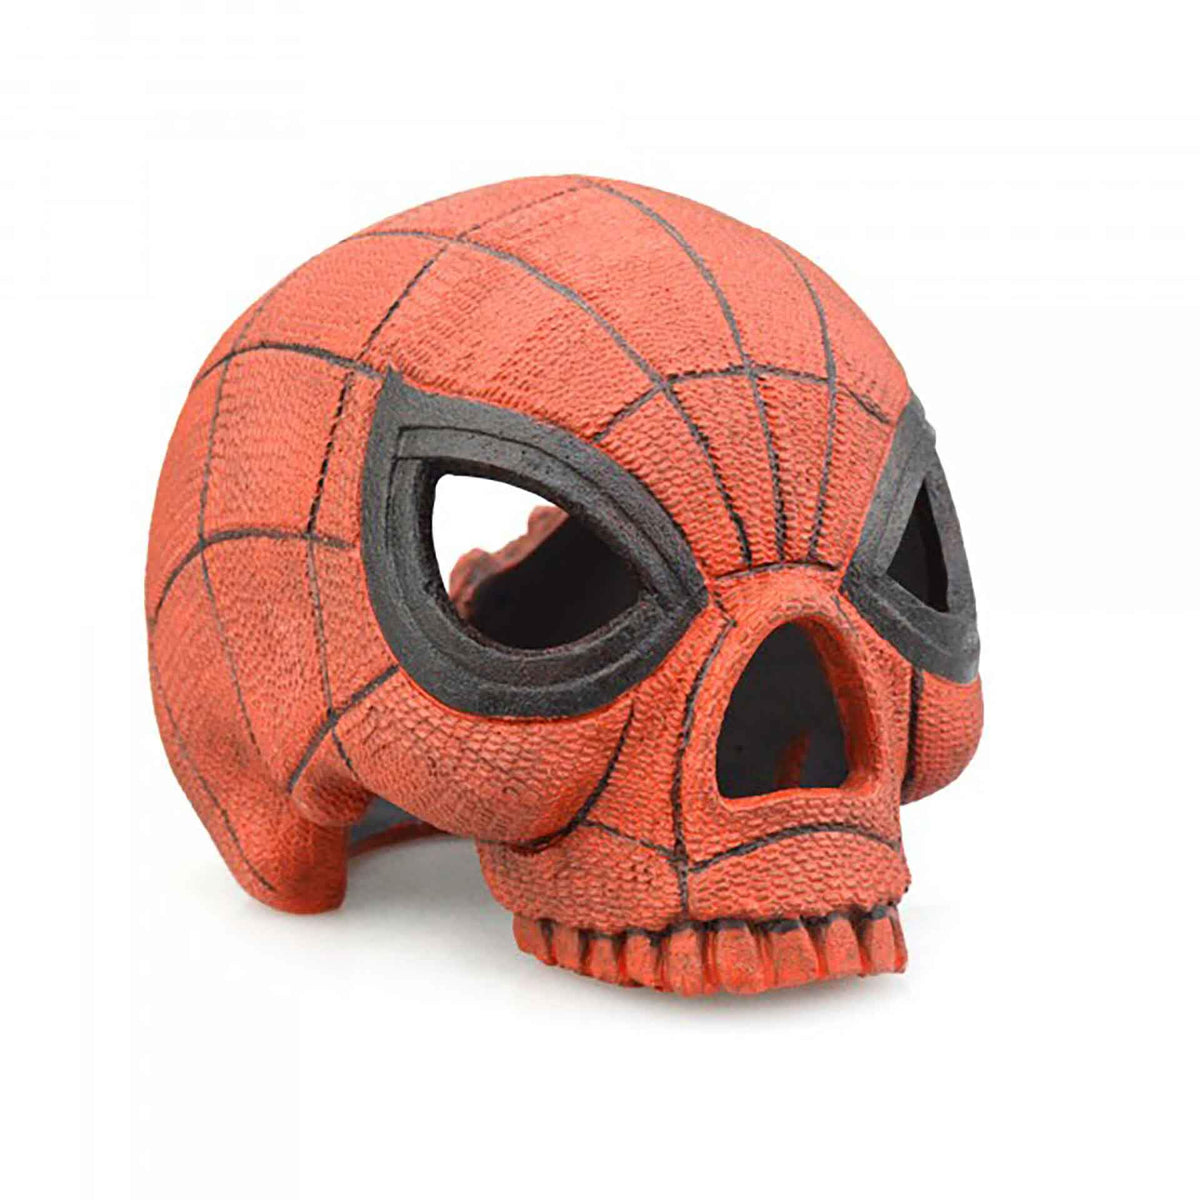 Bioscape - Spider Skull - 13 x 11 x 10cm Aquarium Ornament